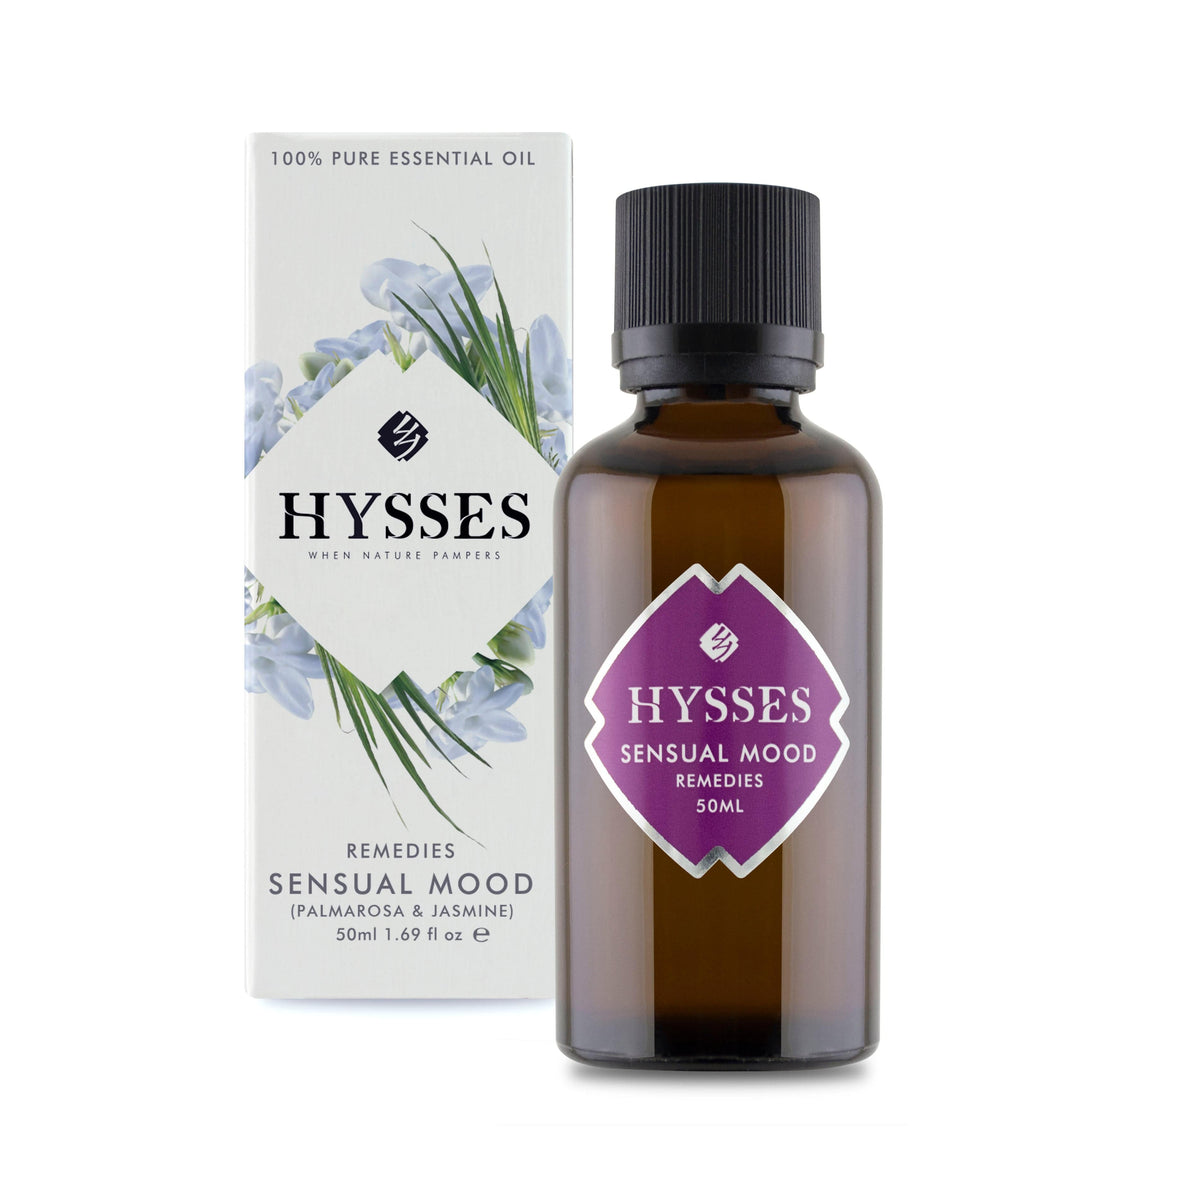 Hysses Essential Oil 50ml Remedies, Sensual Mood